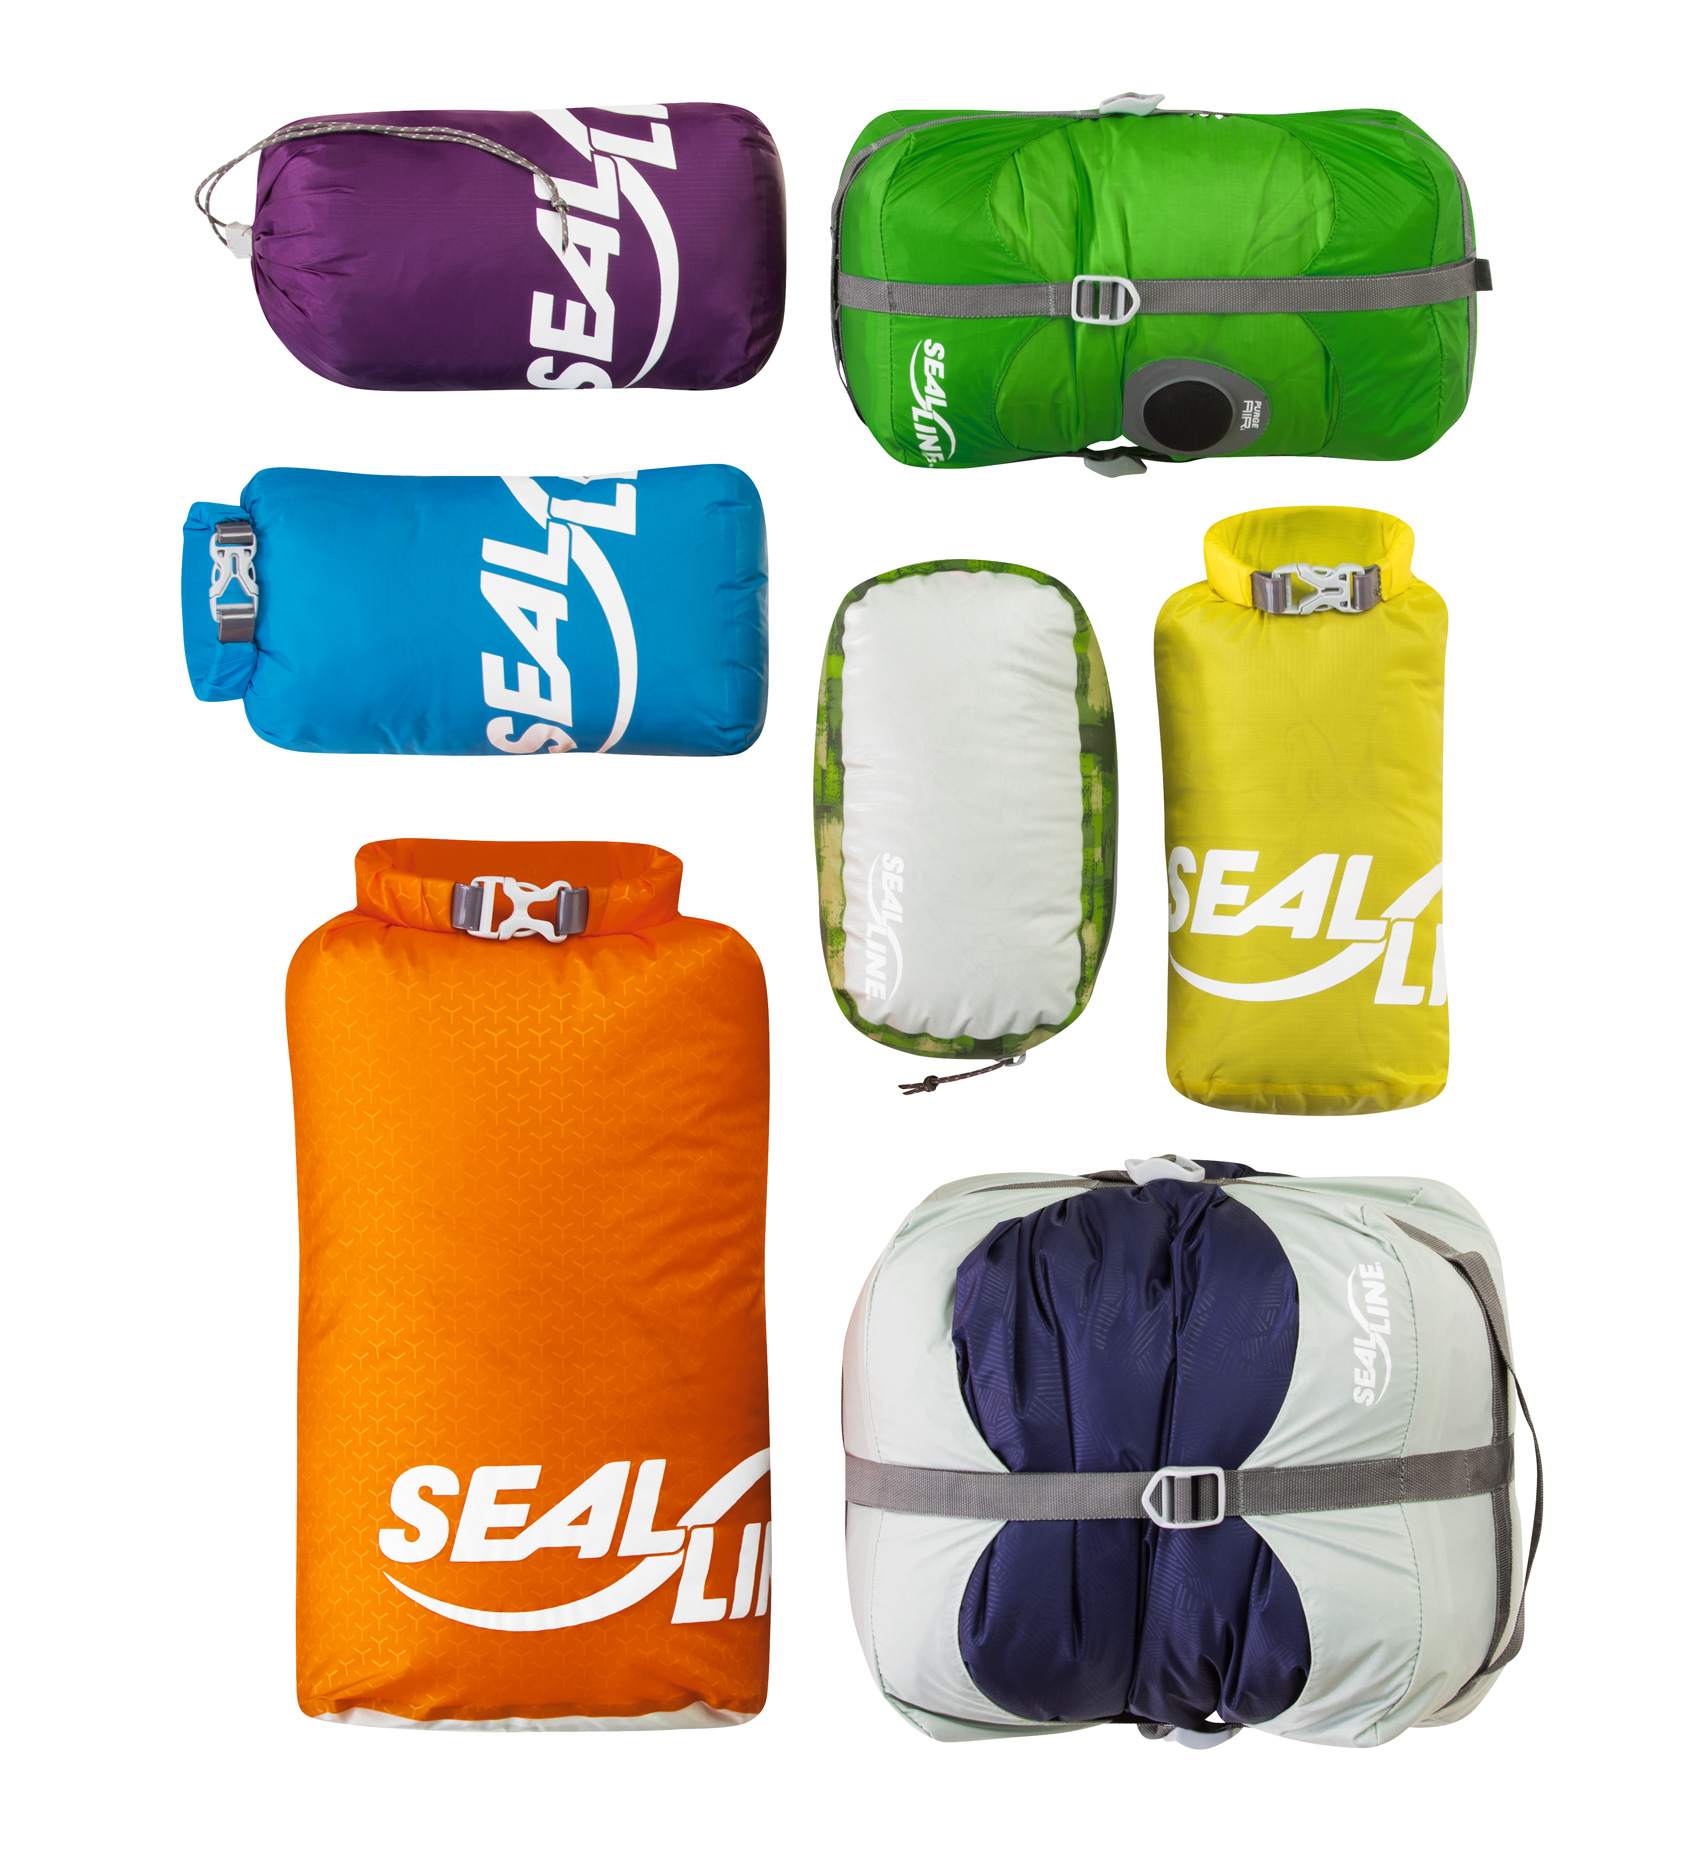 Sealline sacks product photograph